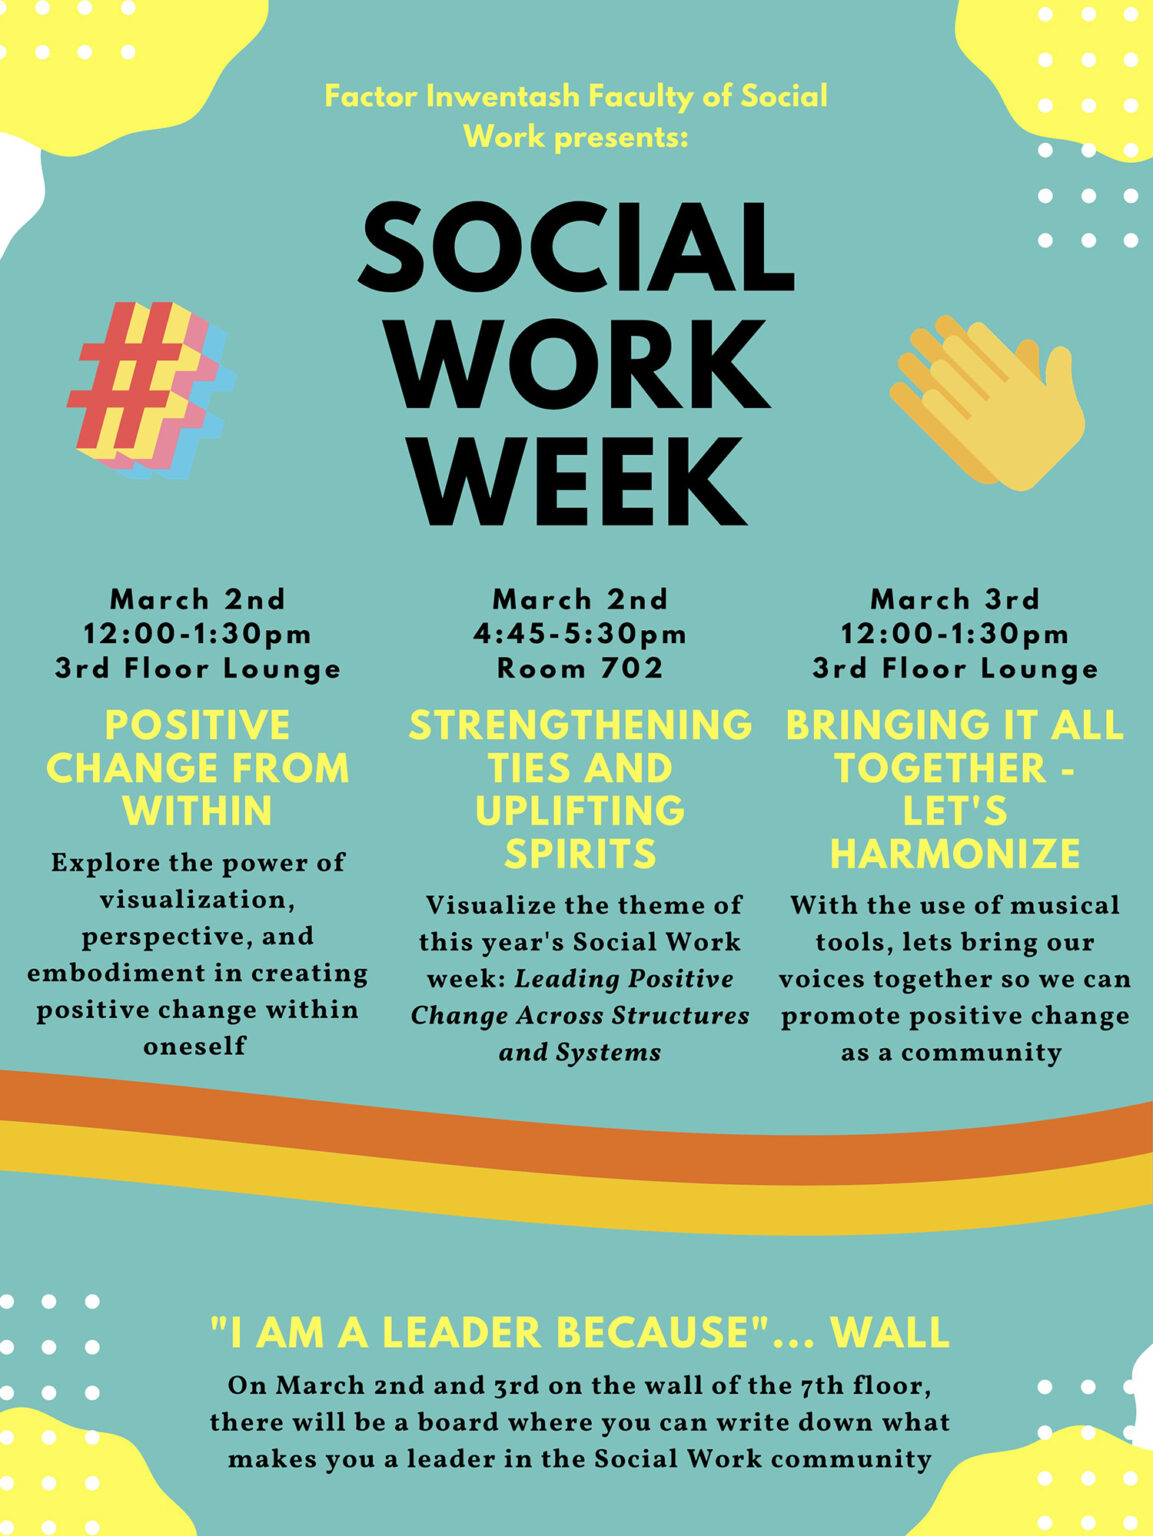 Social Work Week Strengthening Ties and Uplifting Spirits — A Student